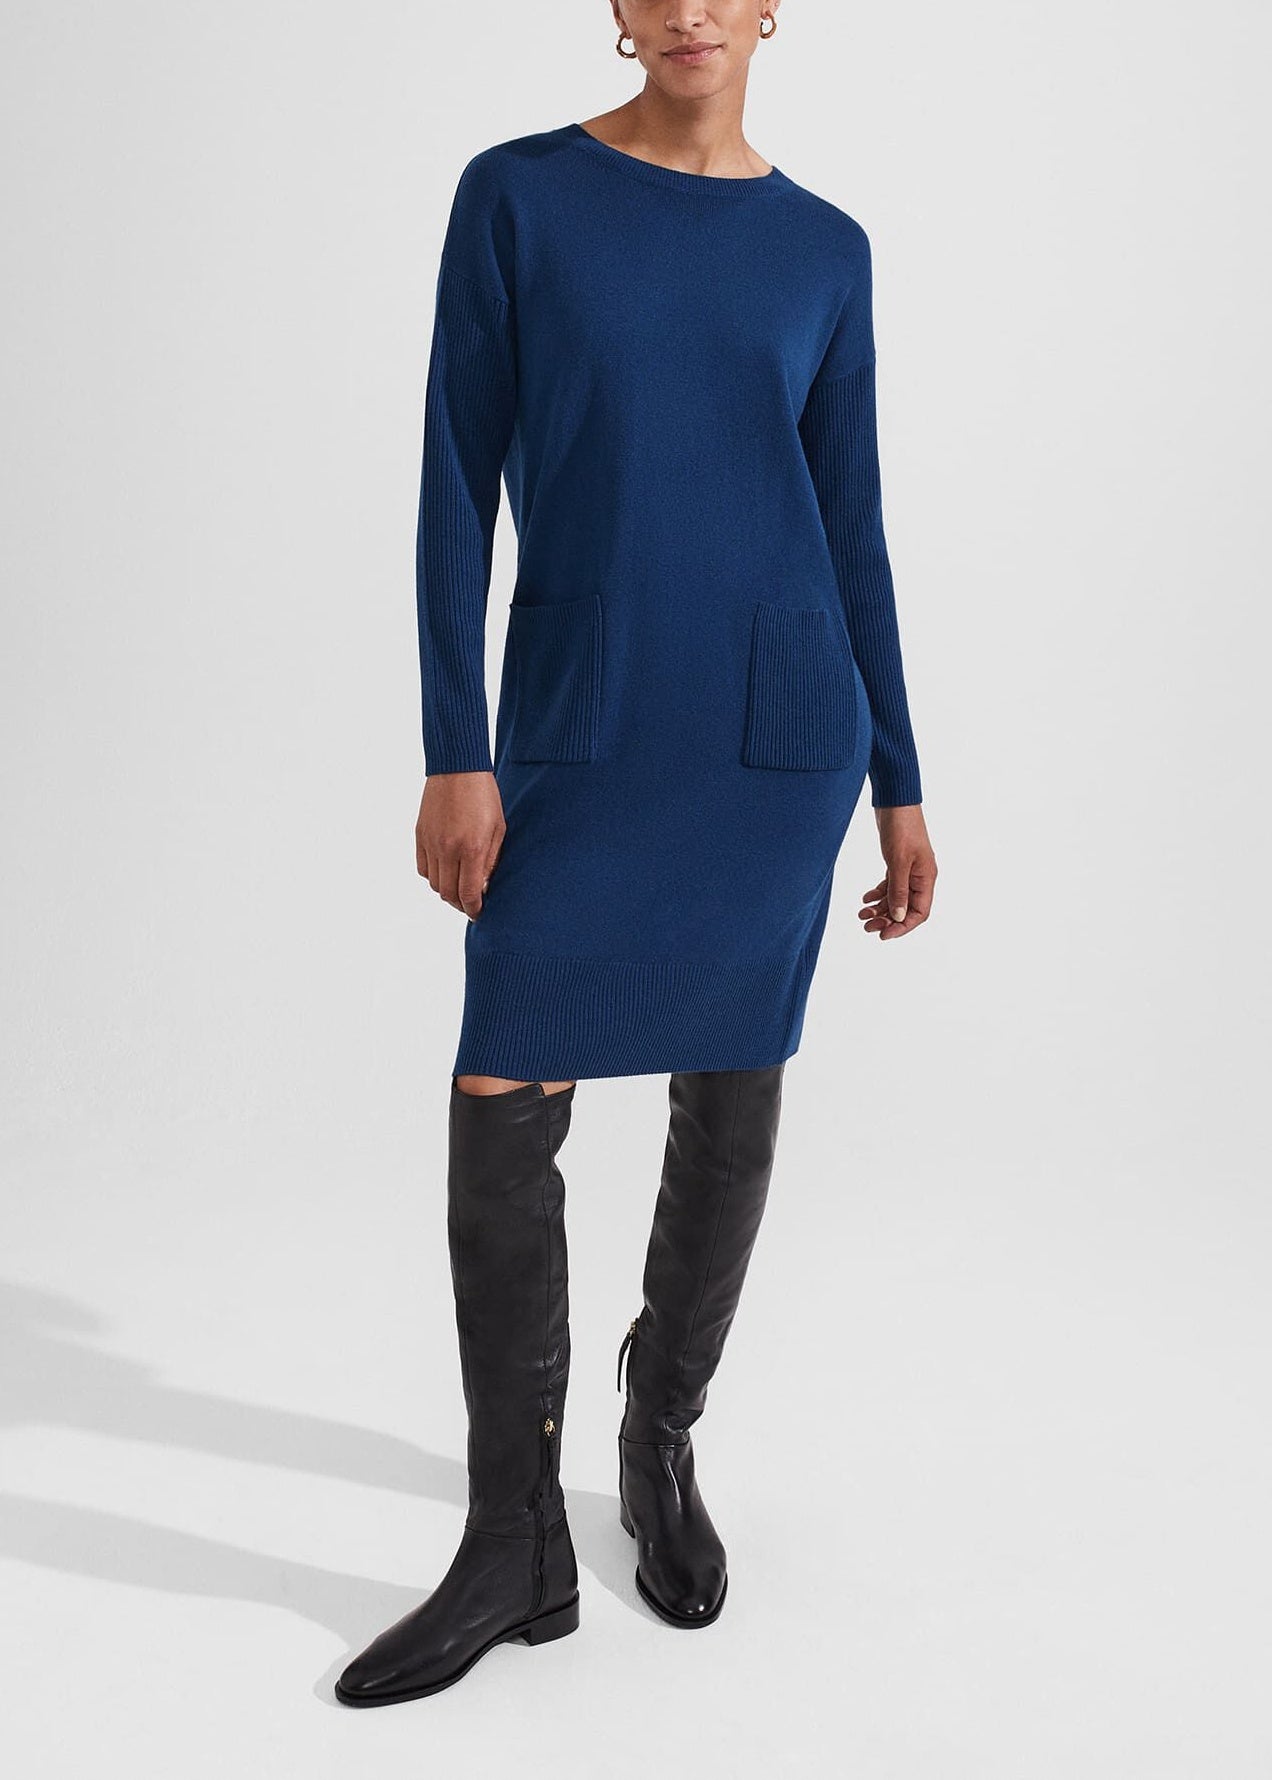 Devora Knitted Dress 0223/9441/9044l00 Steel-Blue